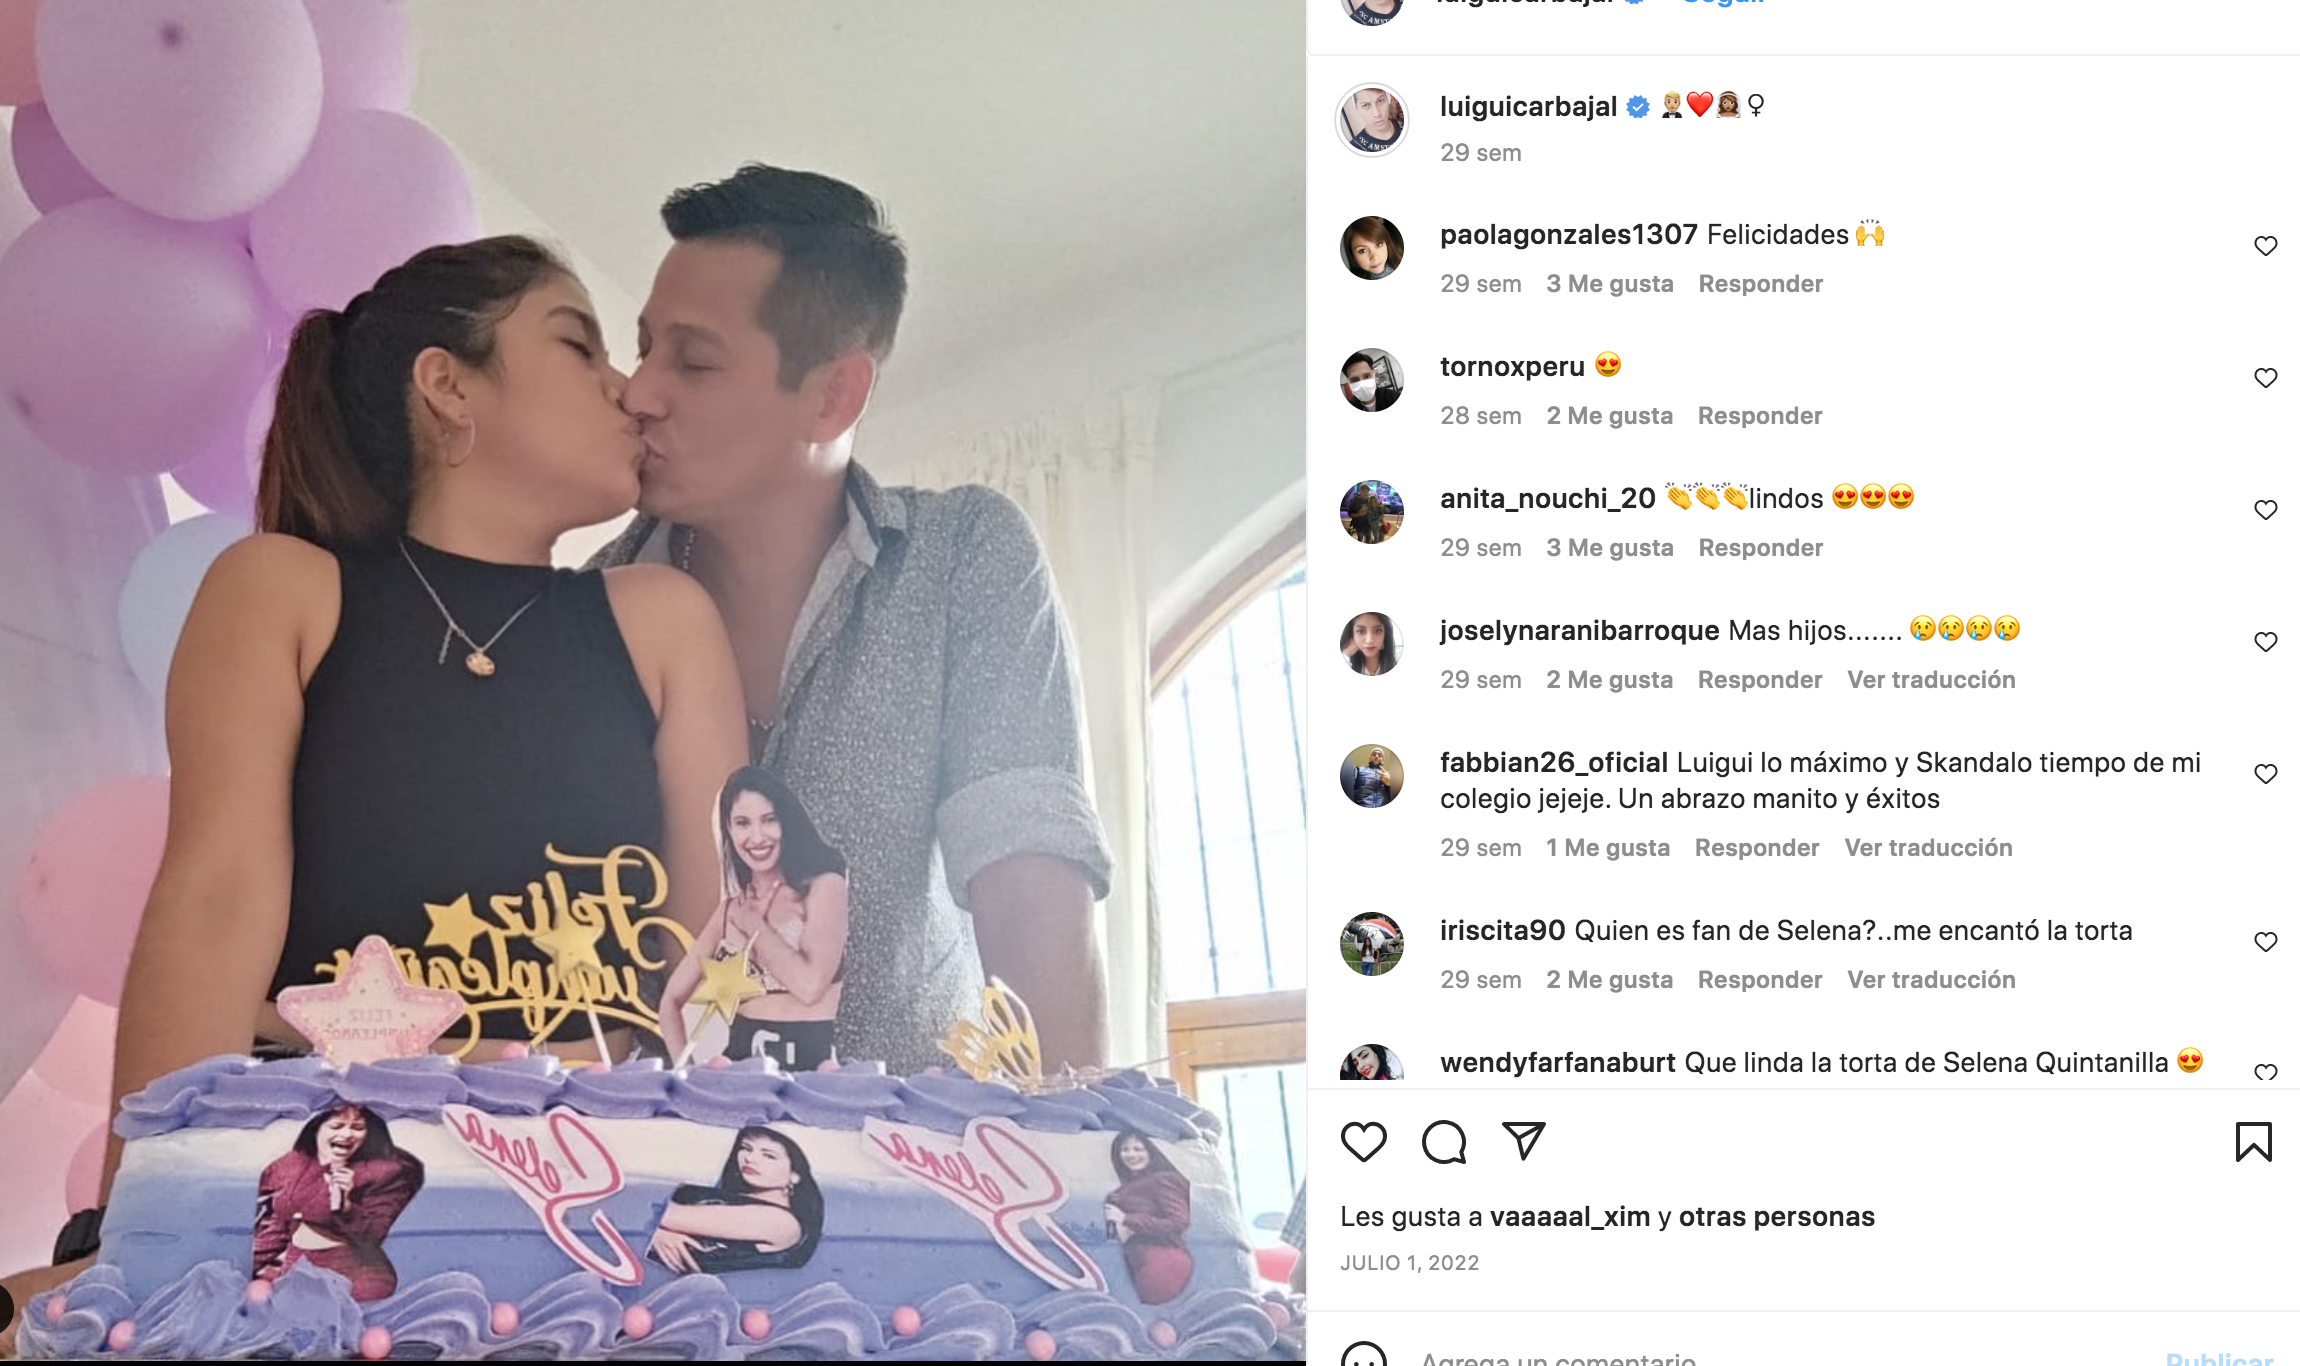 Luigui Carbajal spares no expense for his wedding